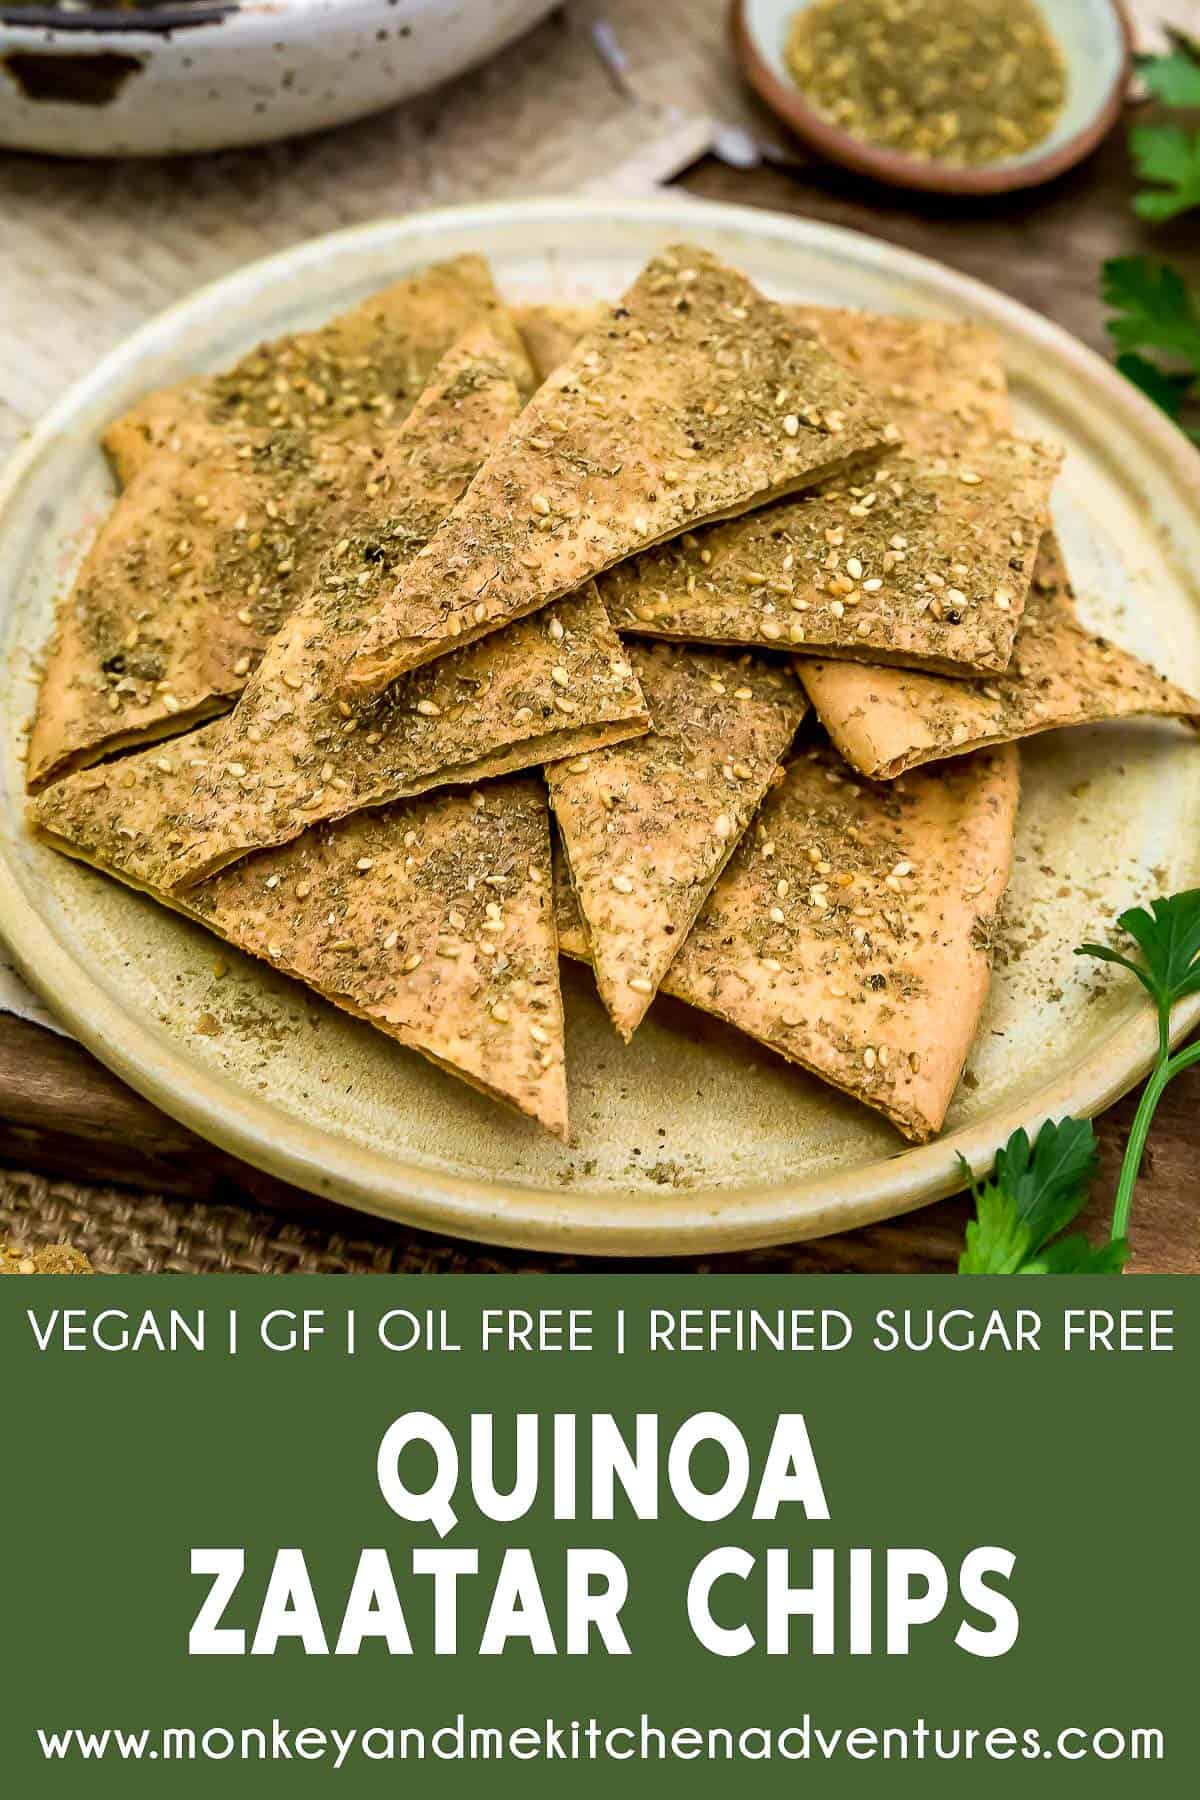 Quinoa Zaatar Chips with text description